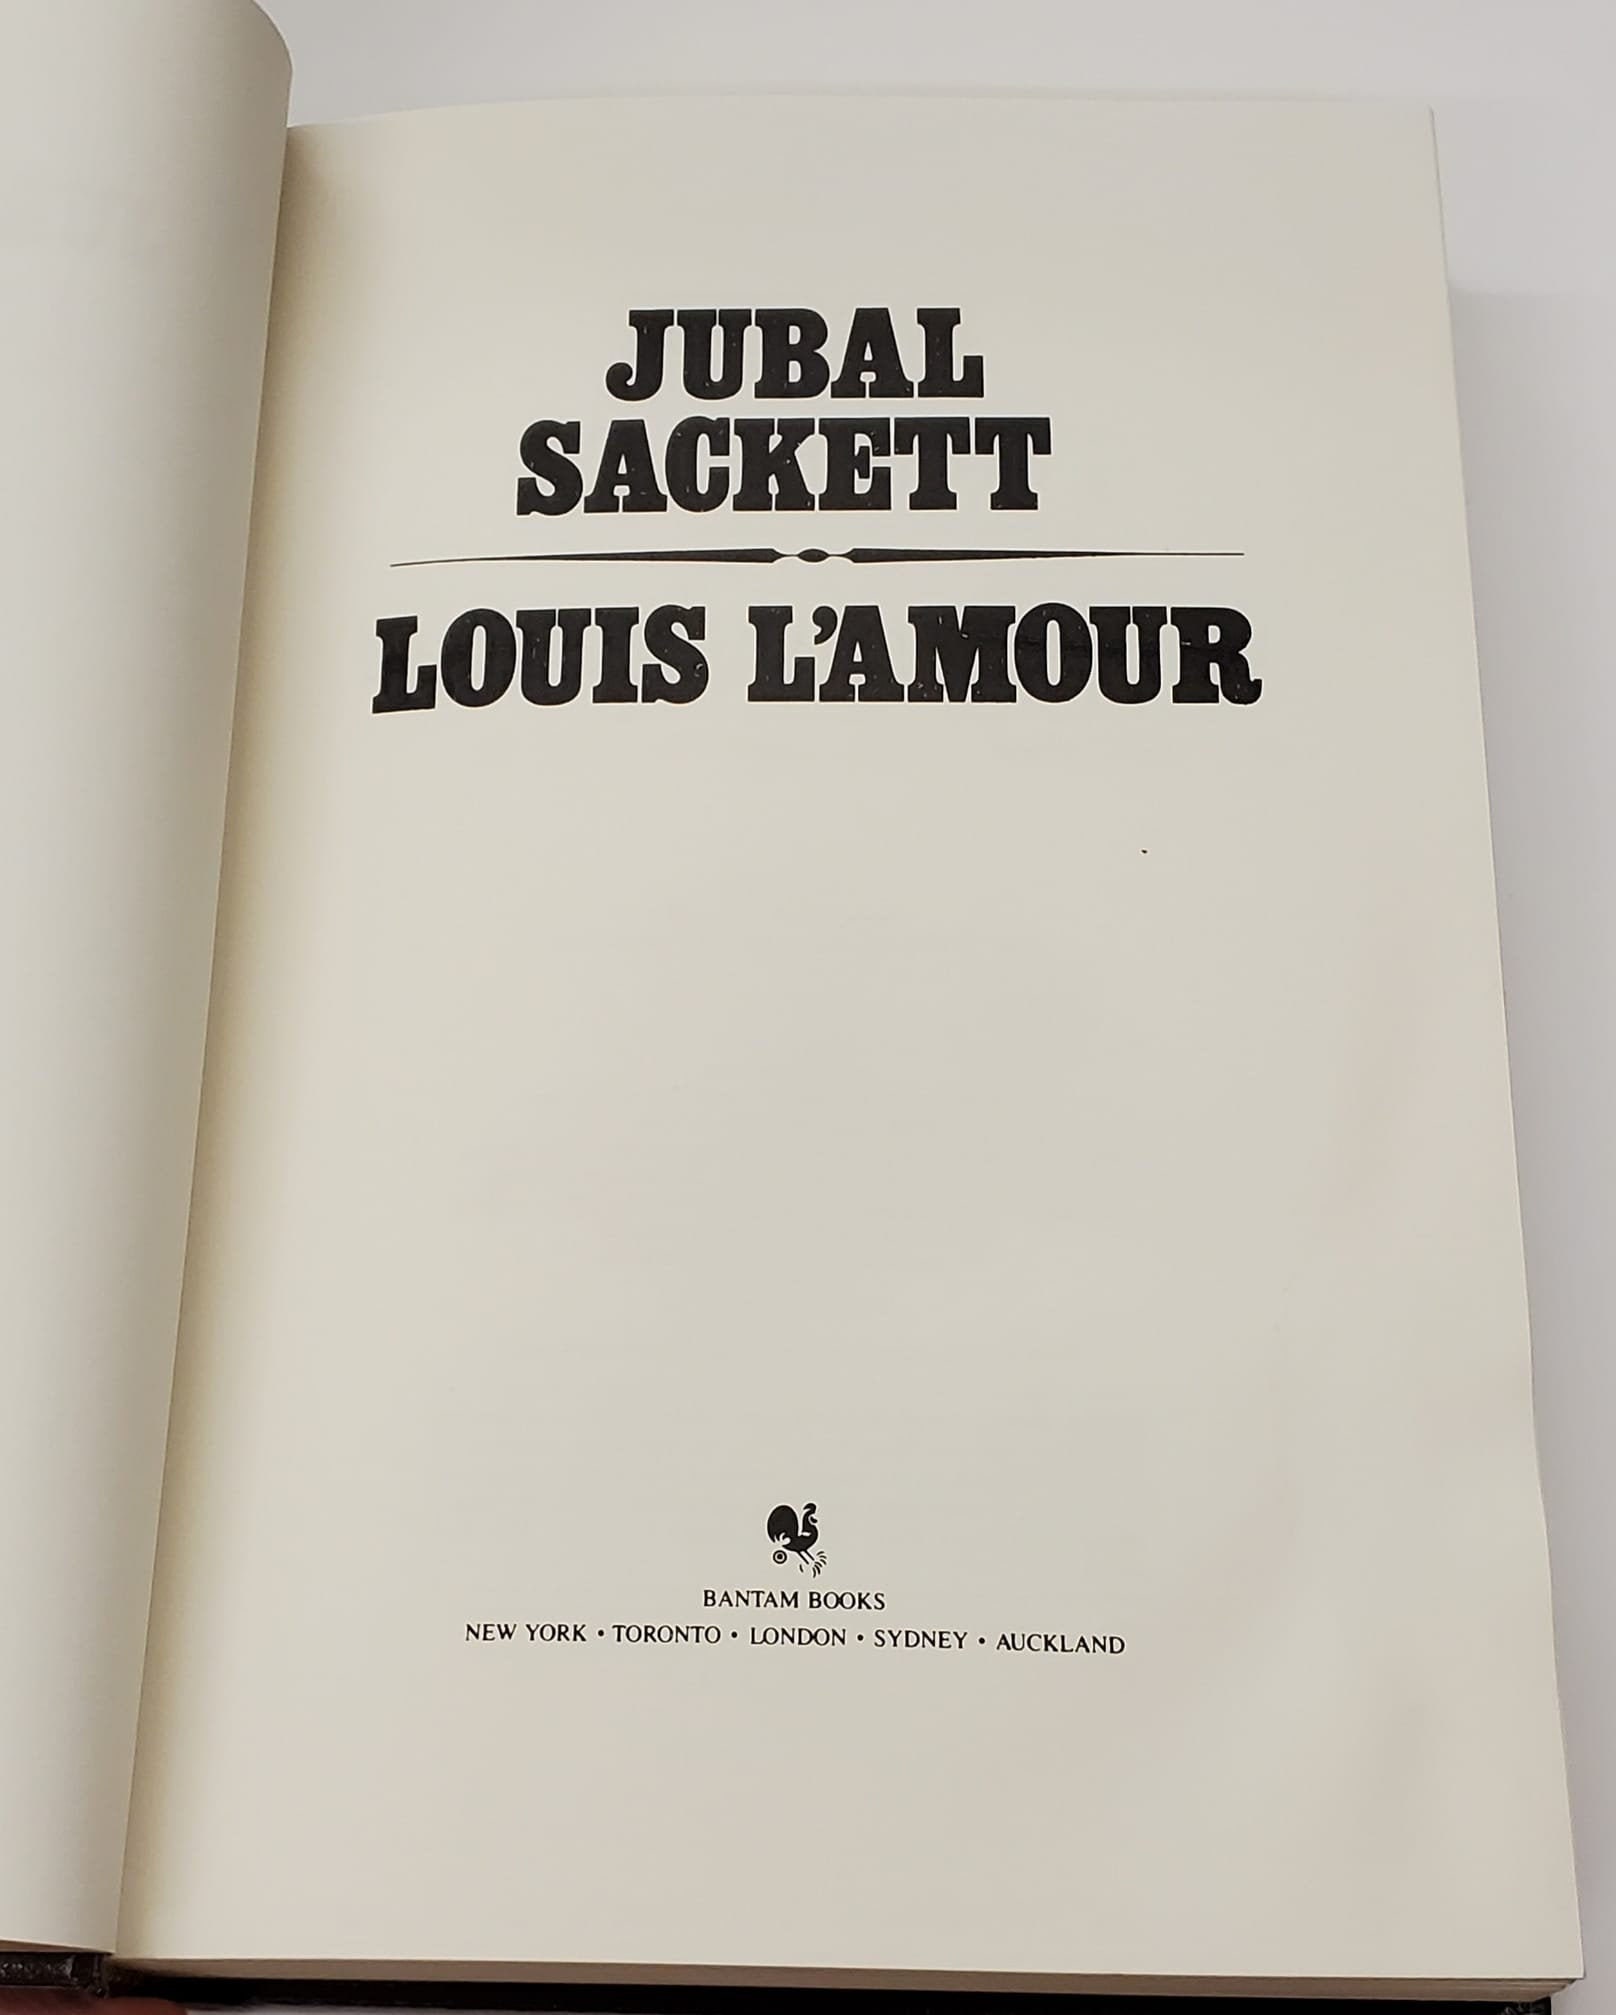 Jubal Sackett by Louis L'Amour